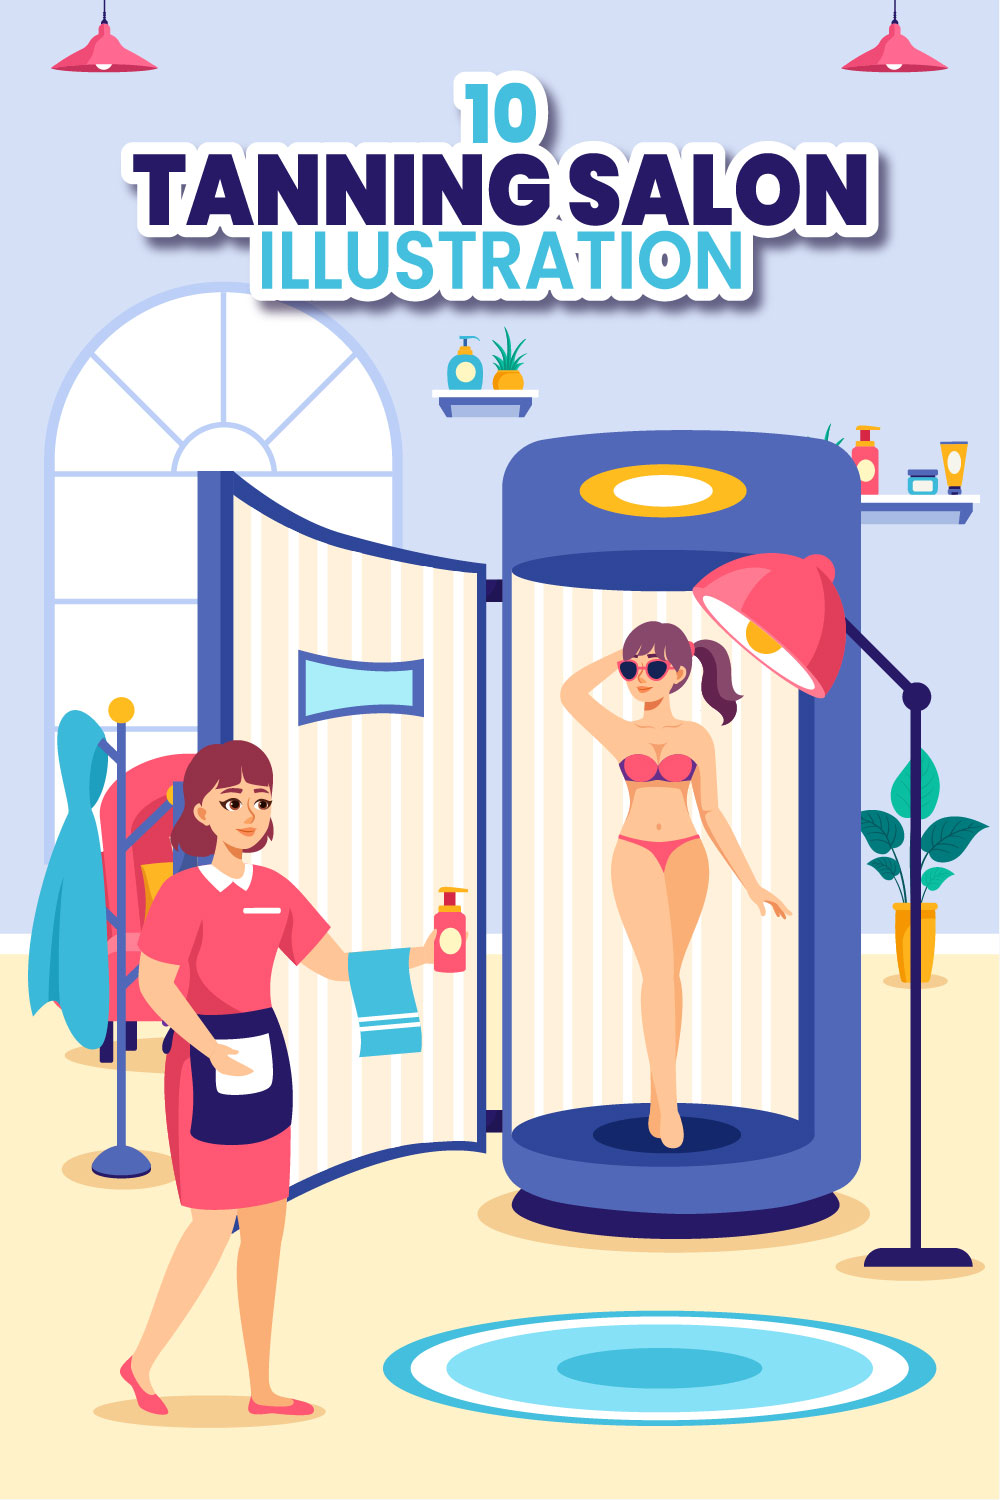 10 Tanning Salon Illustration pinterest preview image.